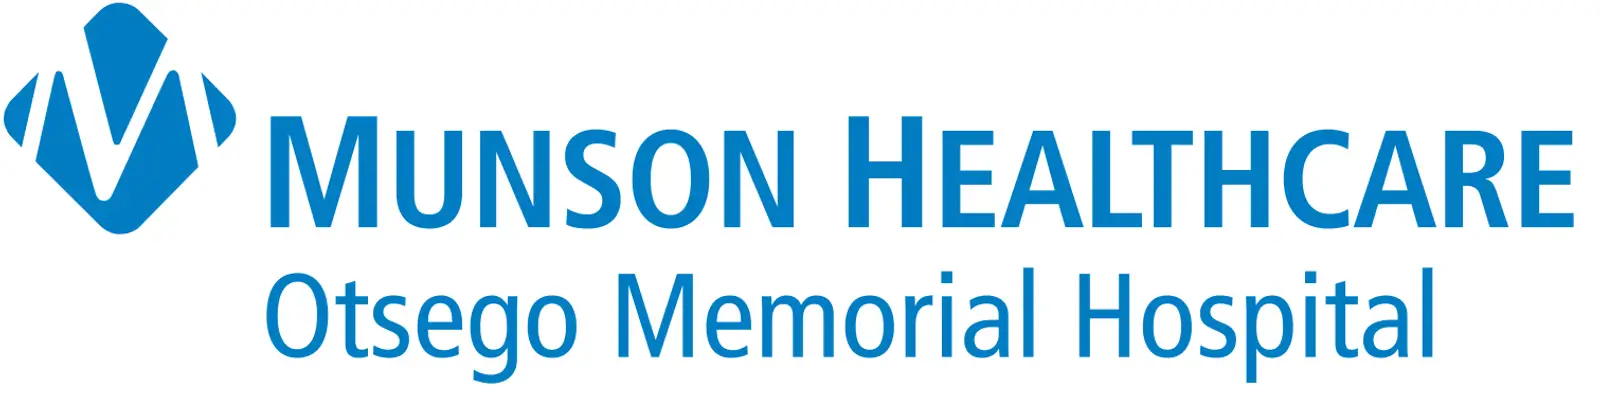 MHC Otsego Memorial Hospital logo